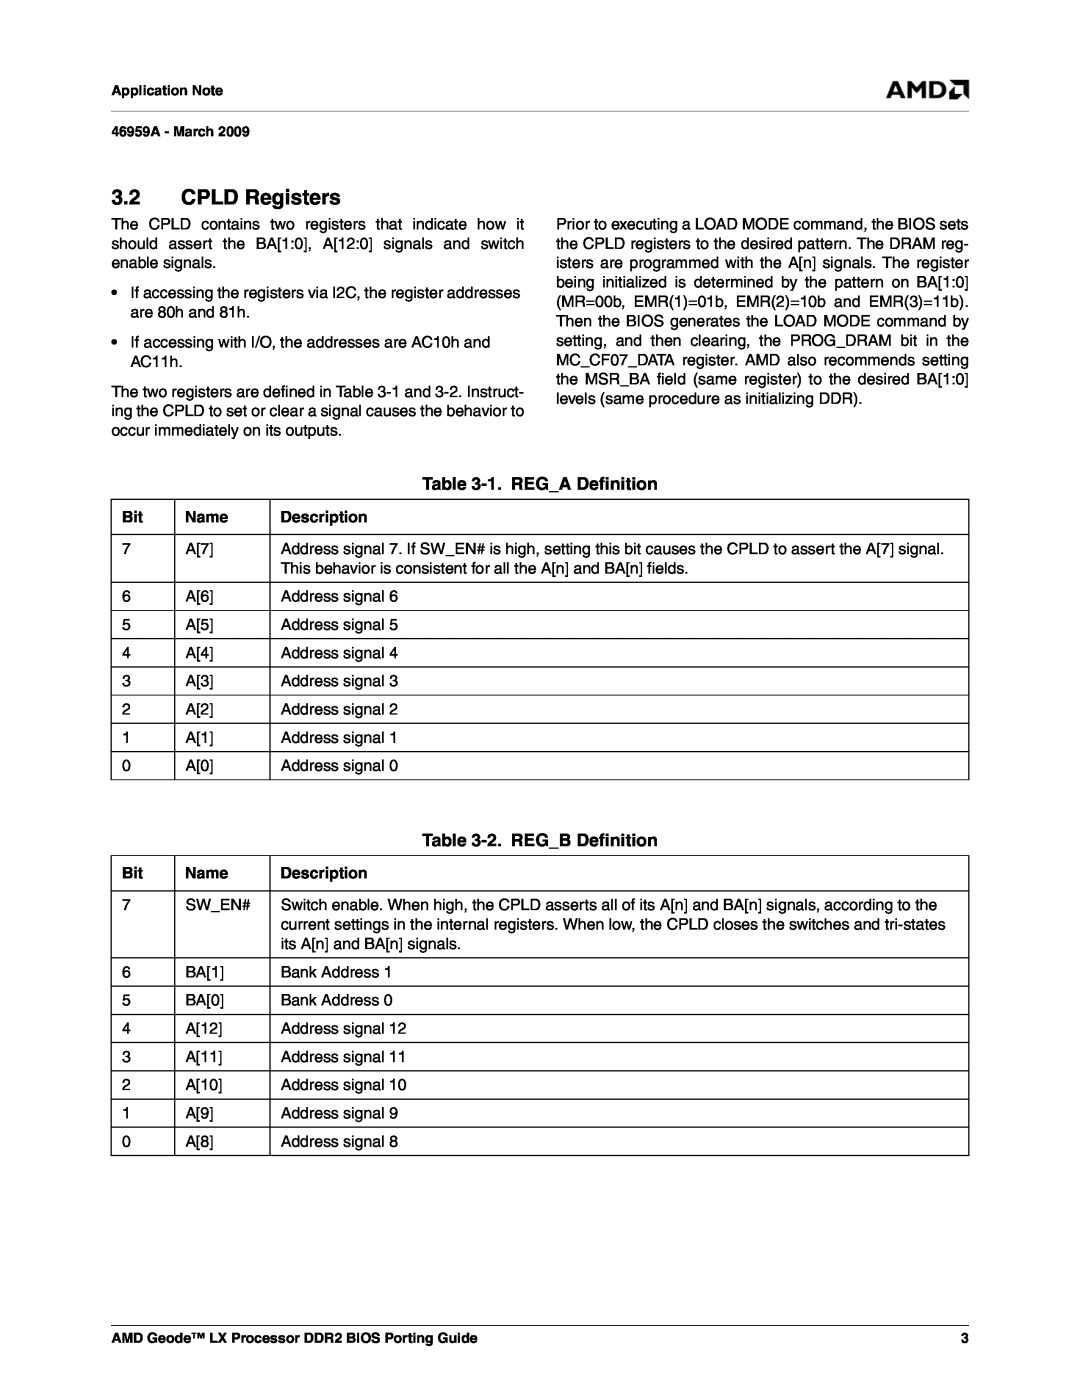 AMD CS5536 manual CPLD Registers, 1. REGA Definition, 2. REGB Definition, Name, Description 